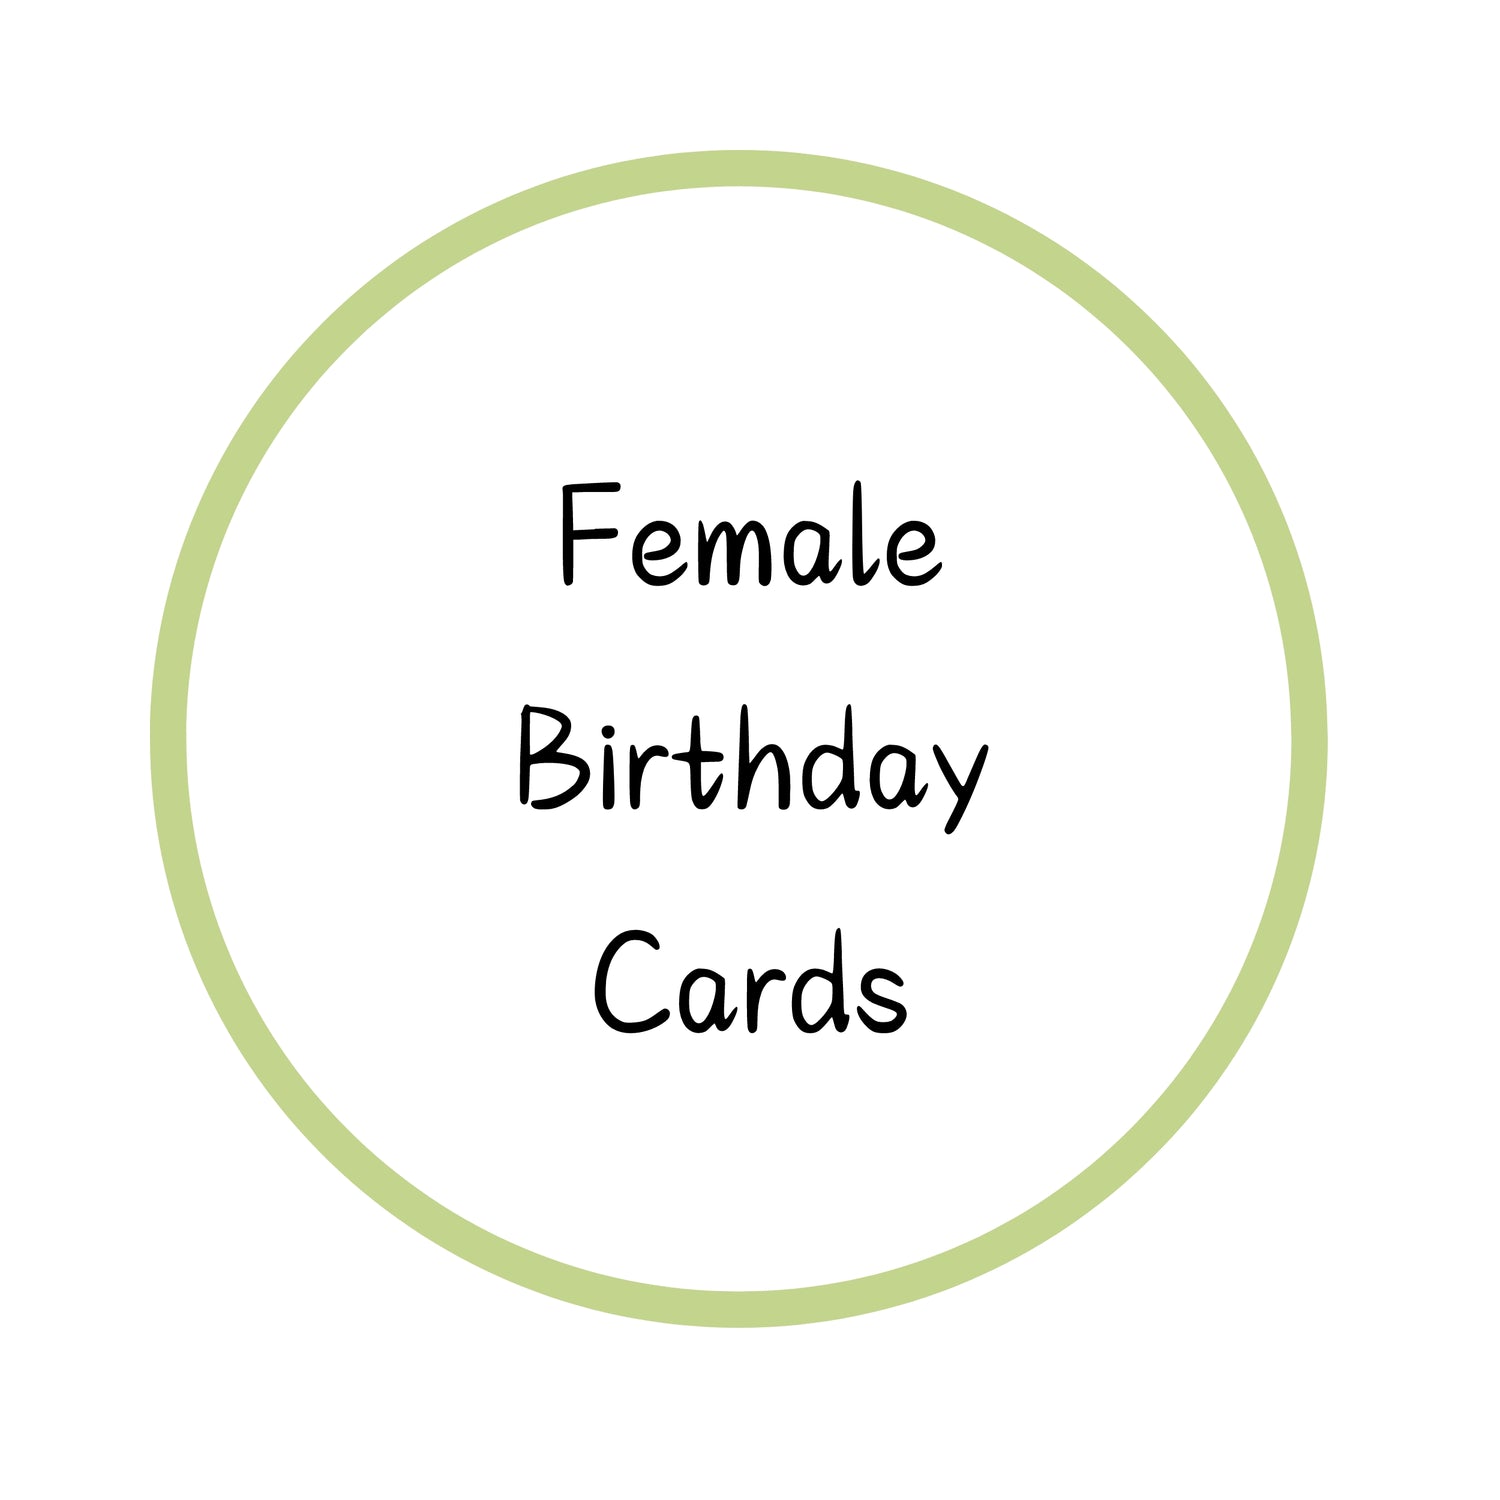 Female Birthday Cards